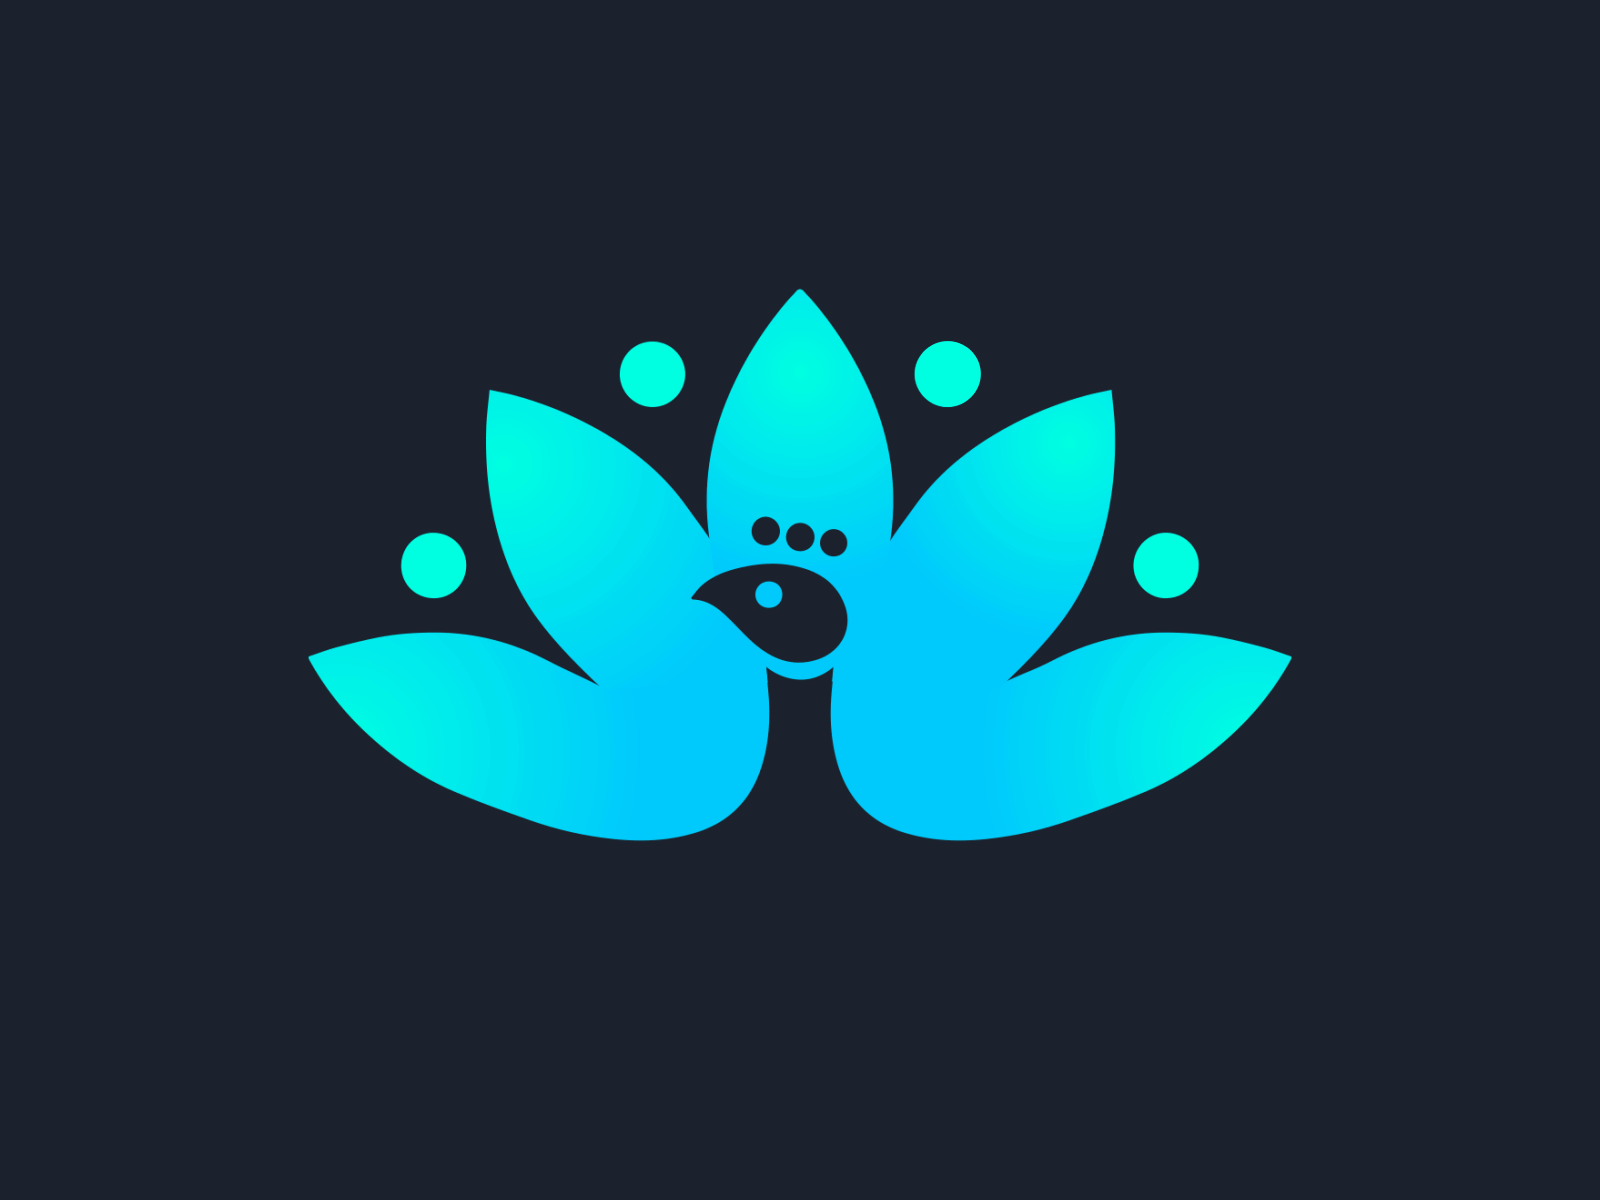 Peacock logo animation